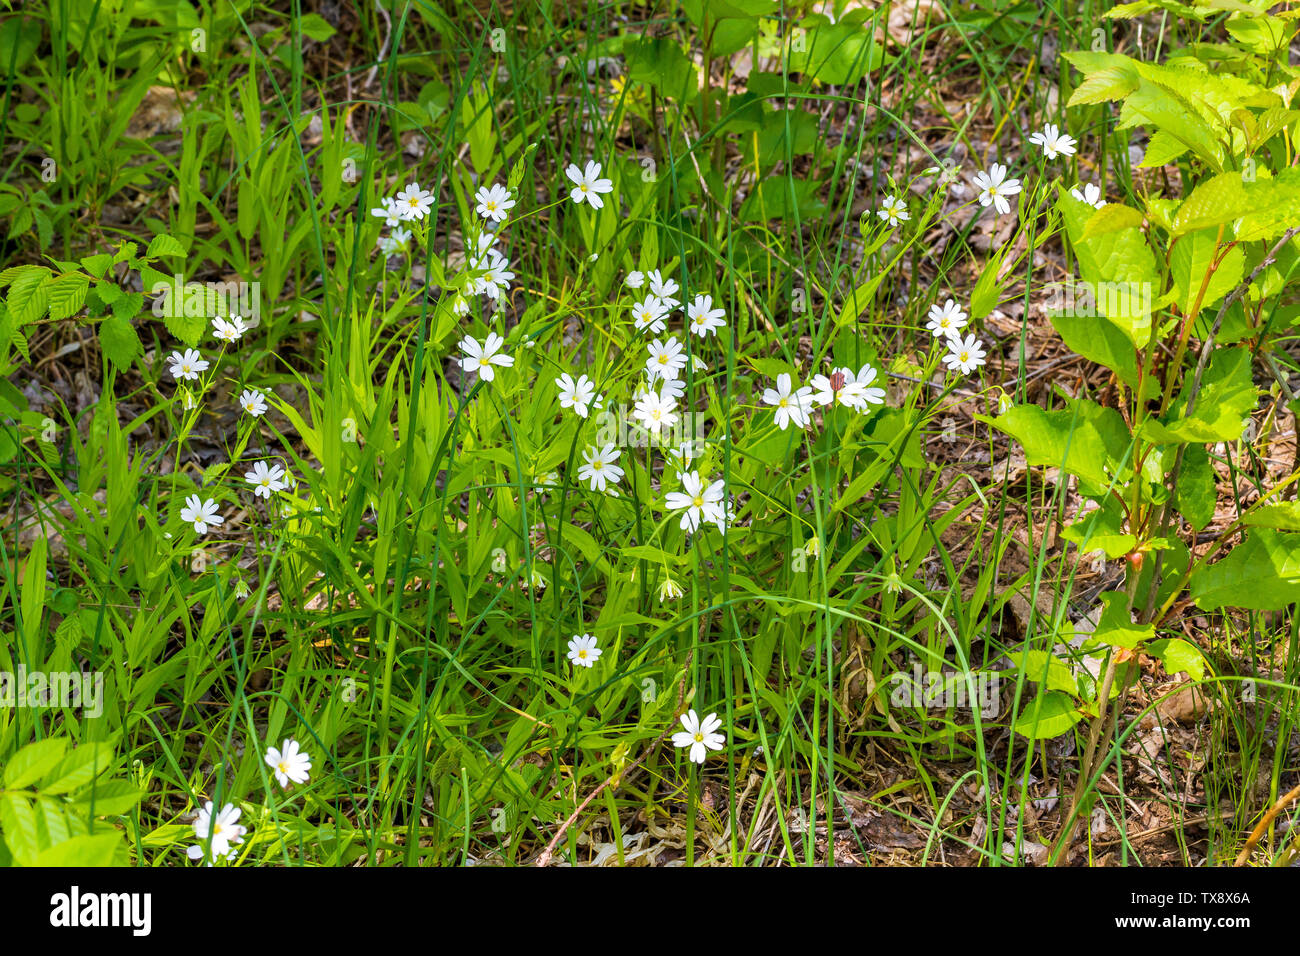 Stellaria field flowers on grass background Stock Photo